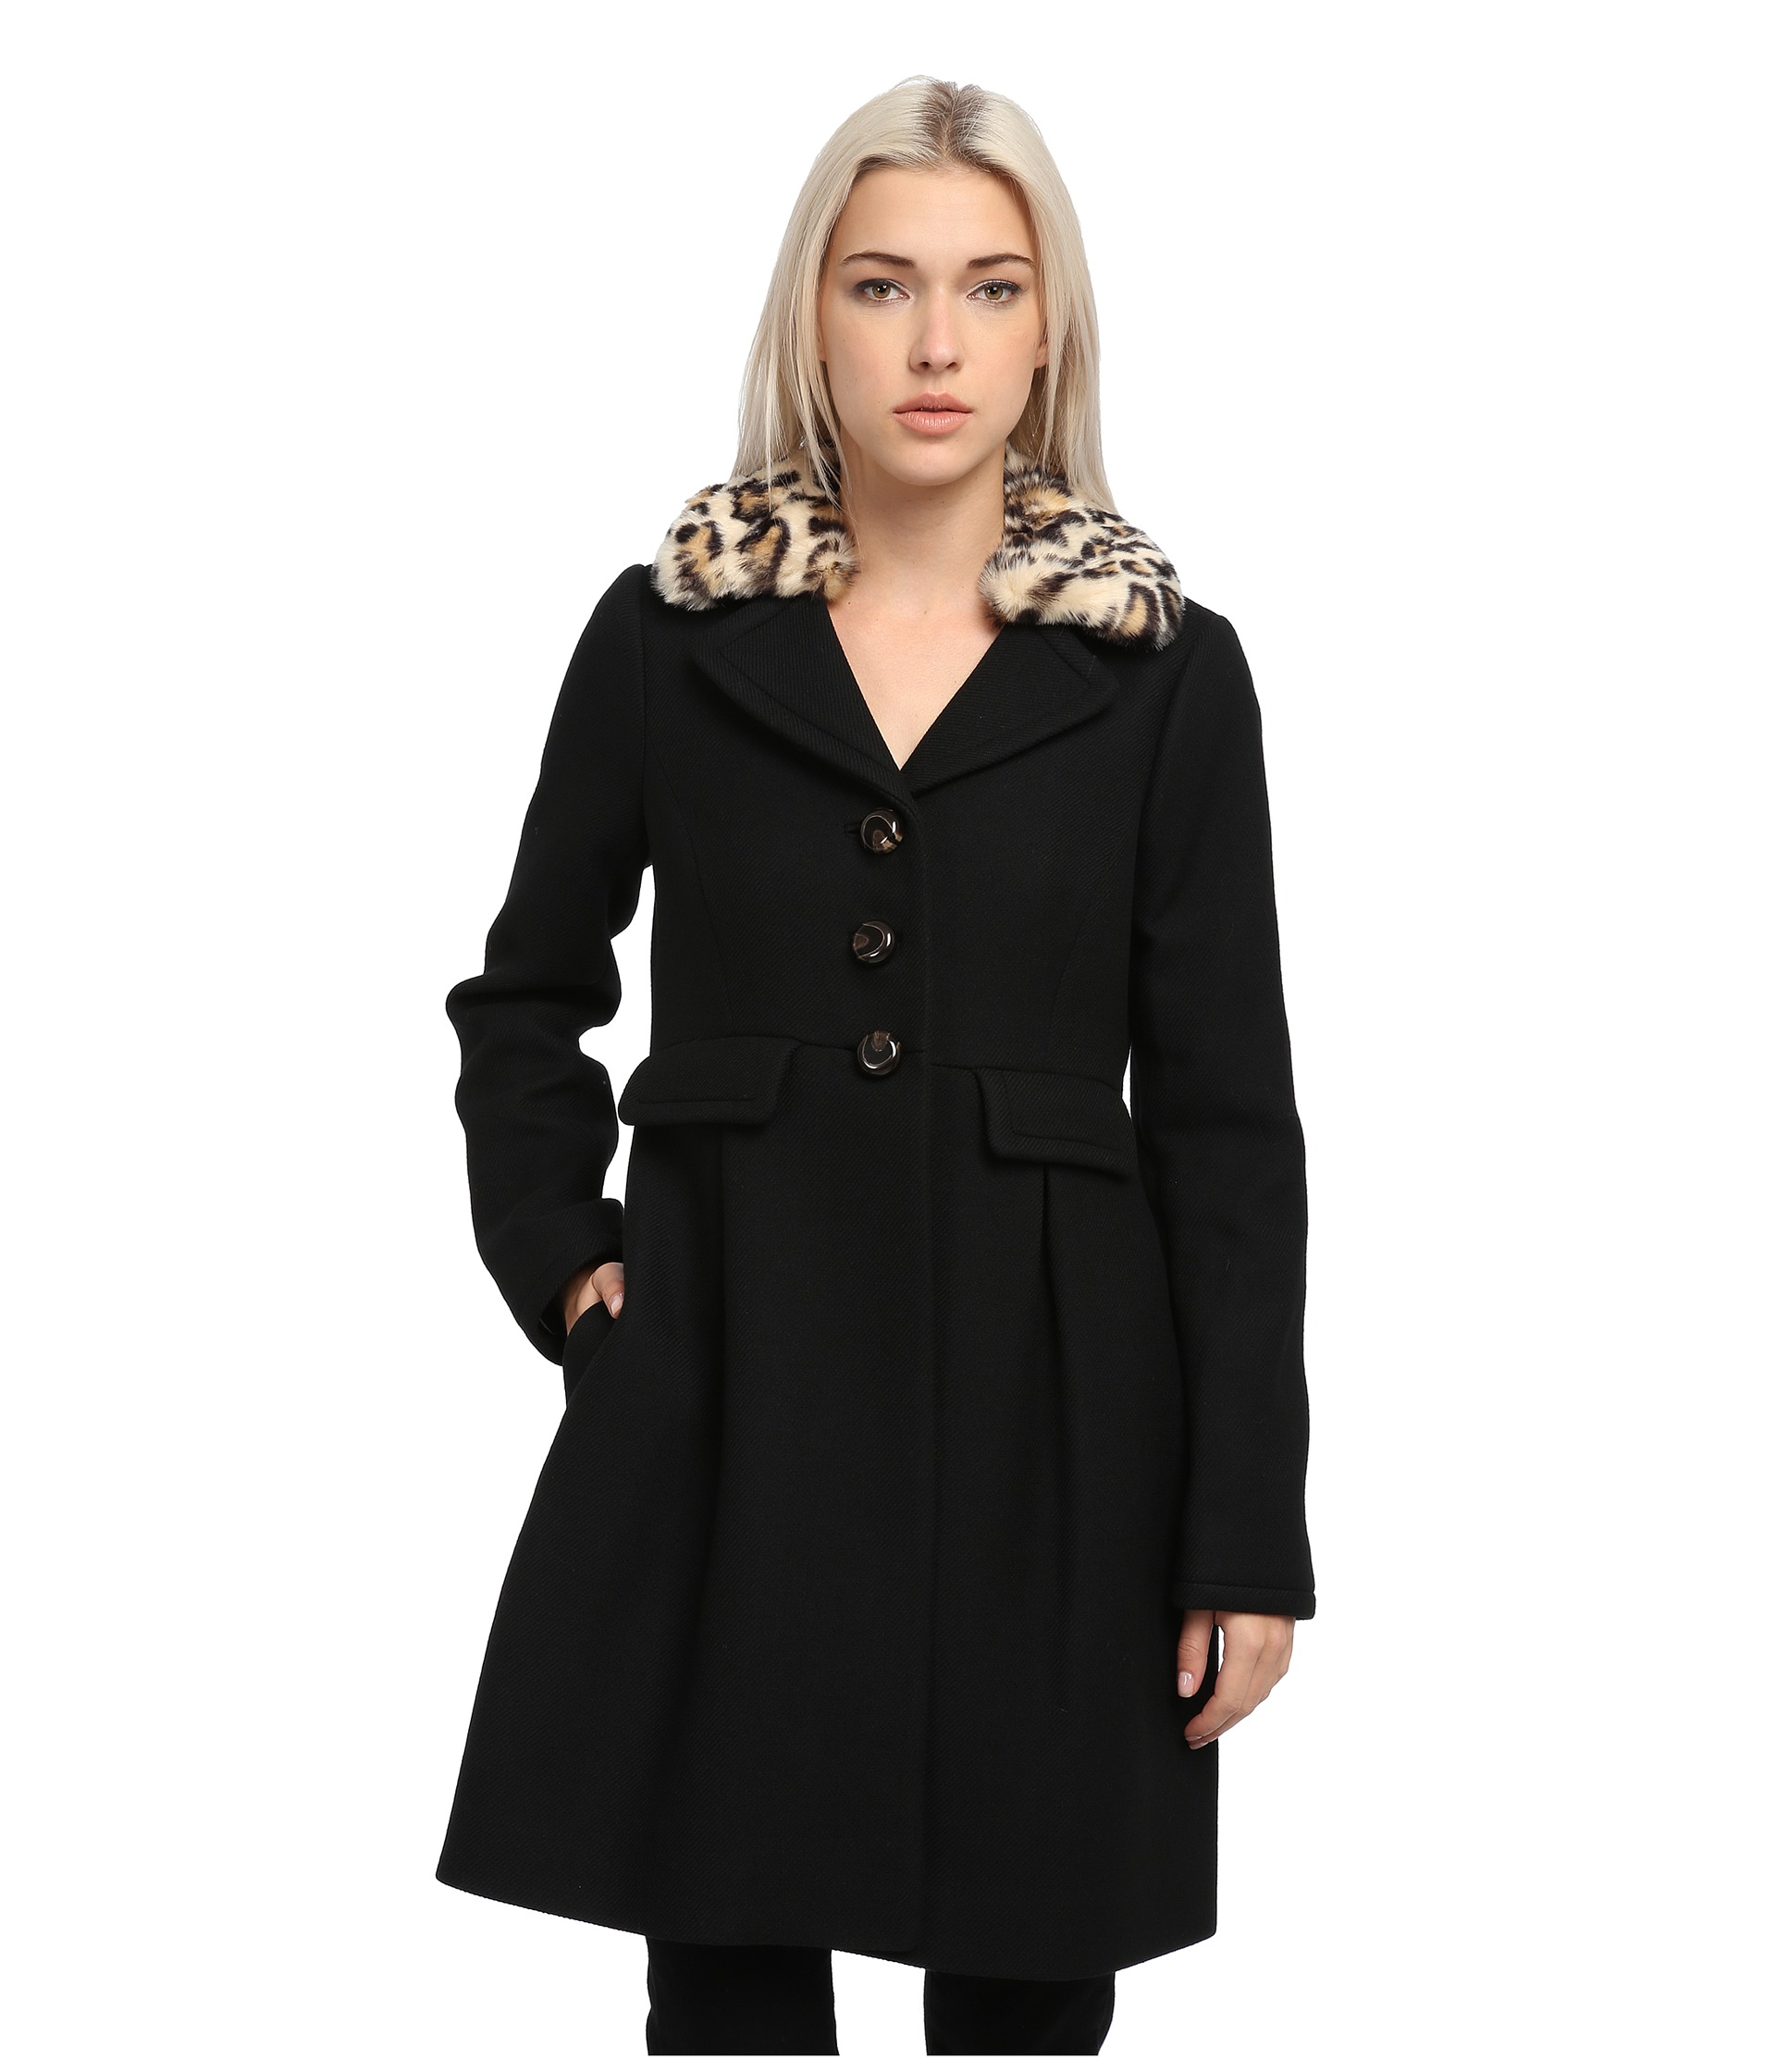 Kate spade new york Faux Fur Collar Dress Coat in Black | Lyst